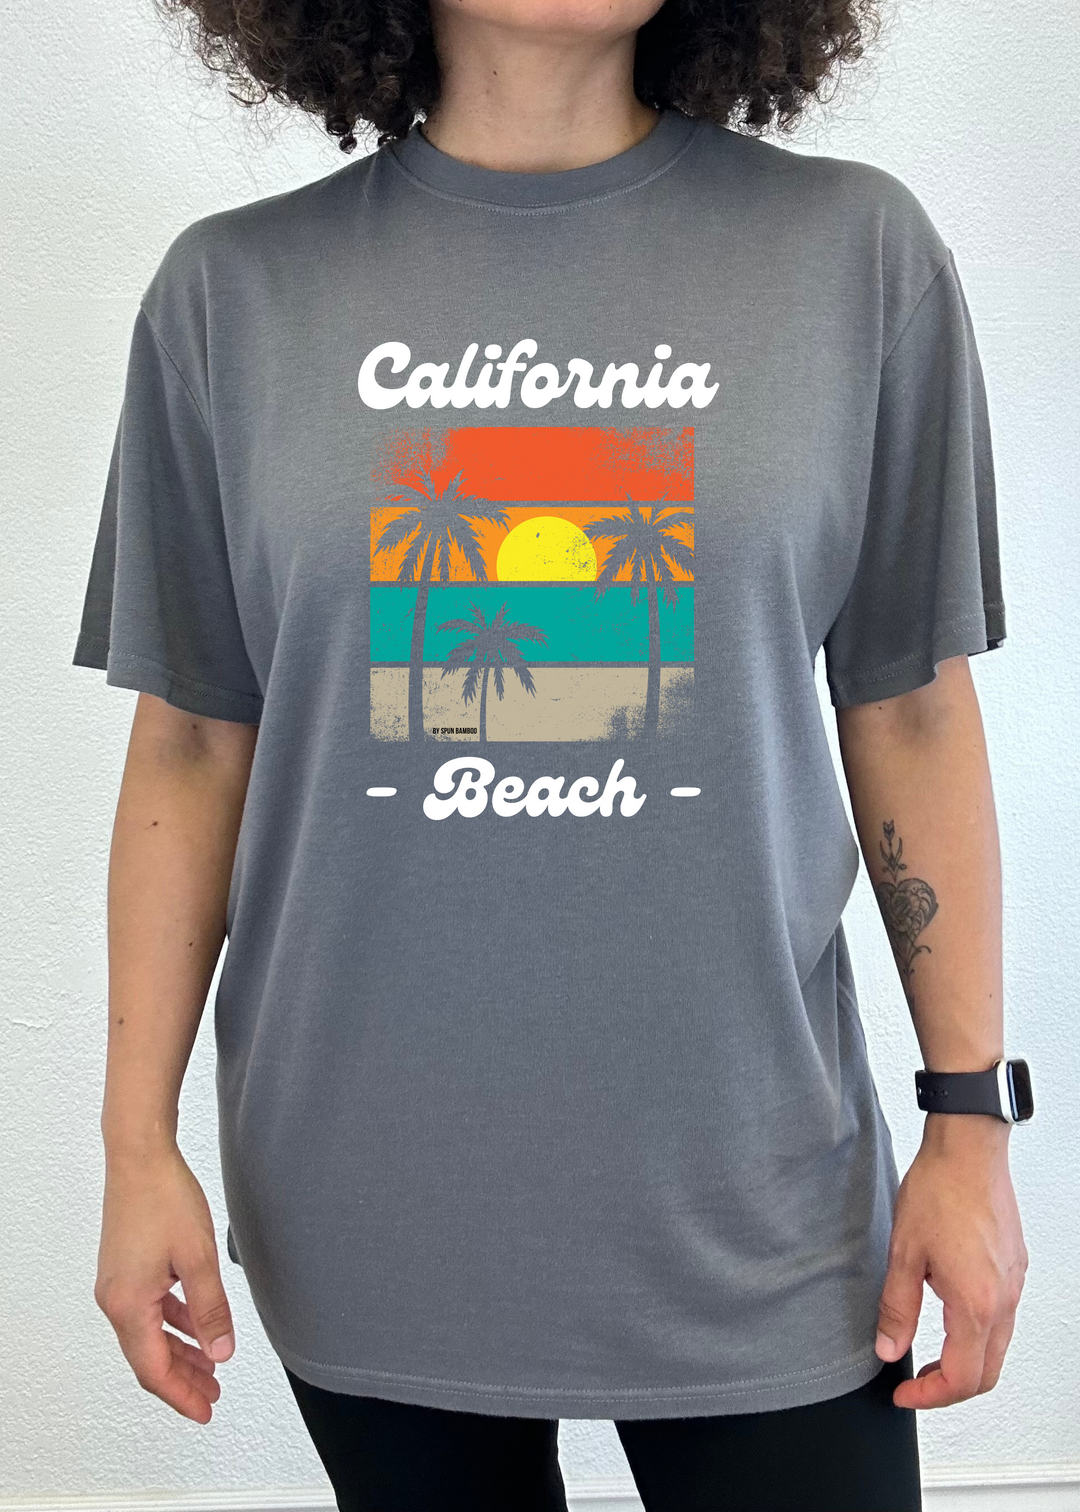 California Beach Unisex Bamboo Viscose/Organic Cotton Short Sleeve Graphic T-Shirt